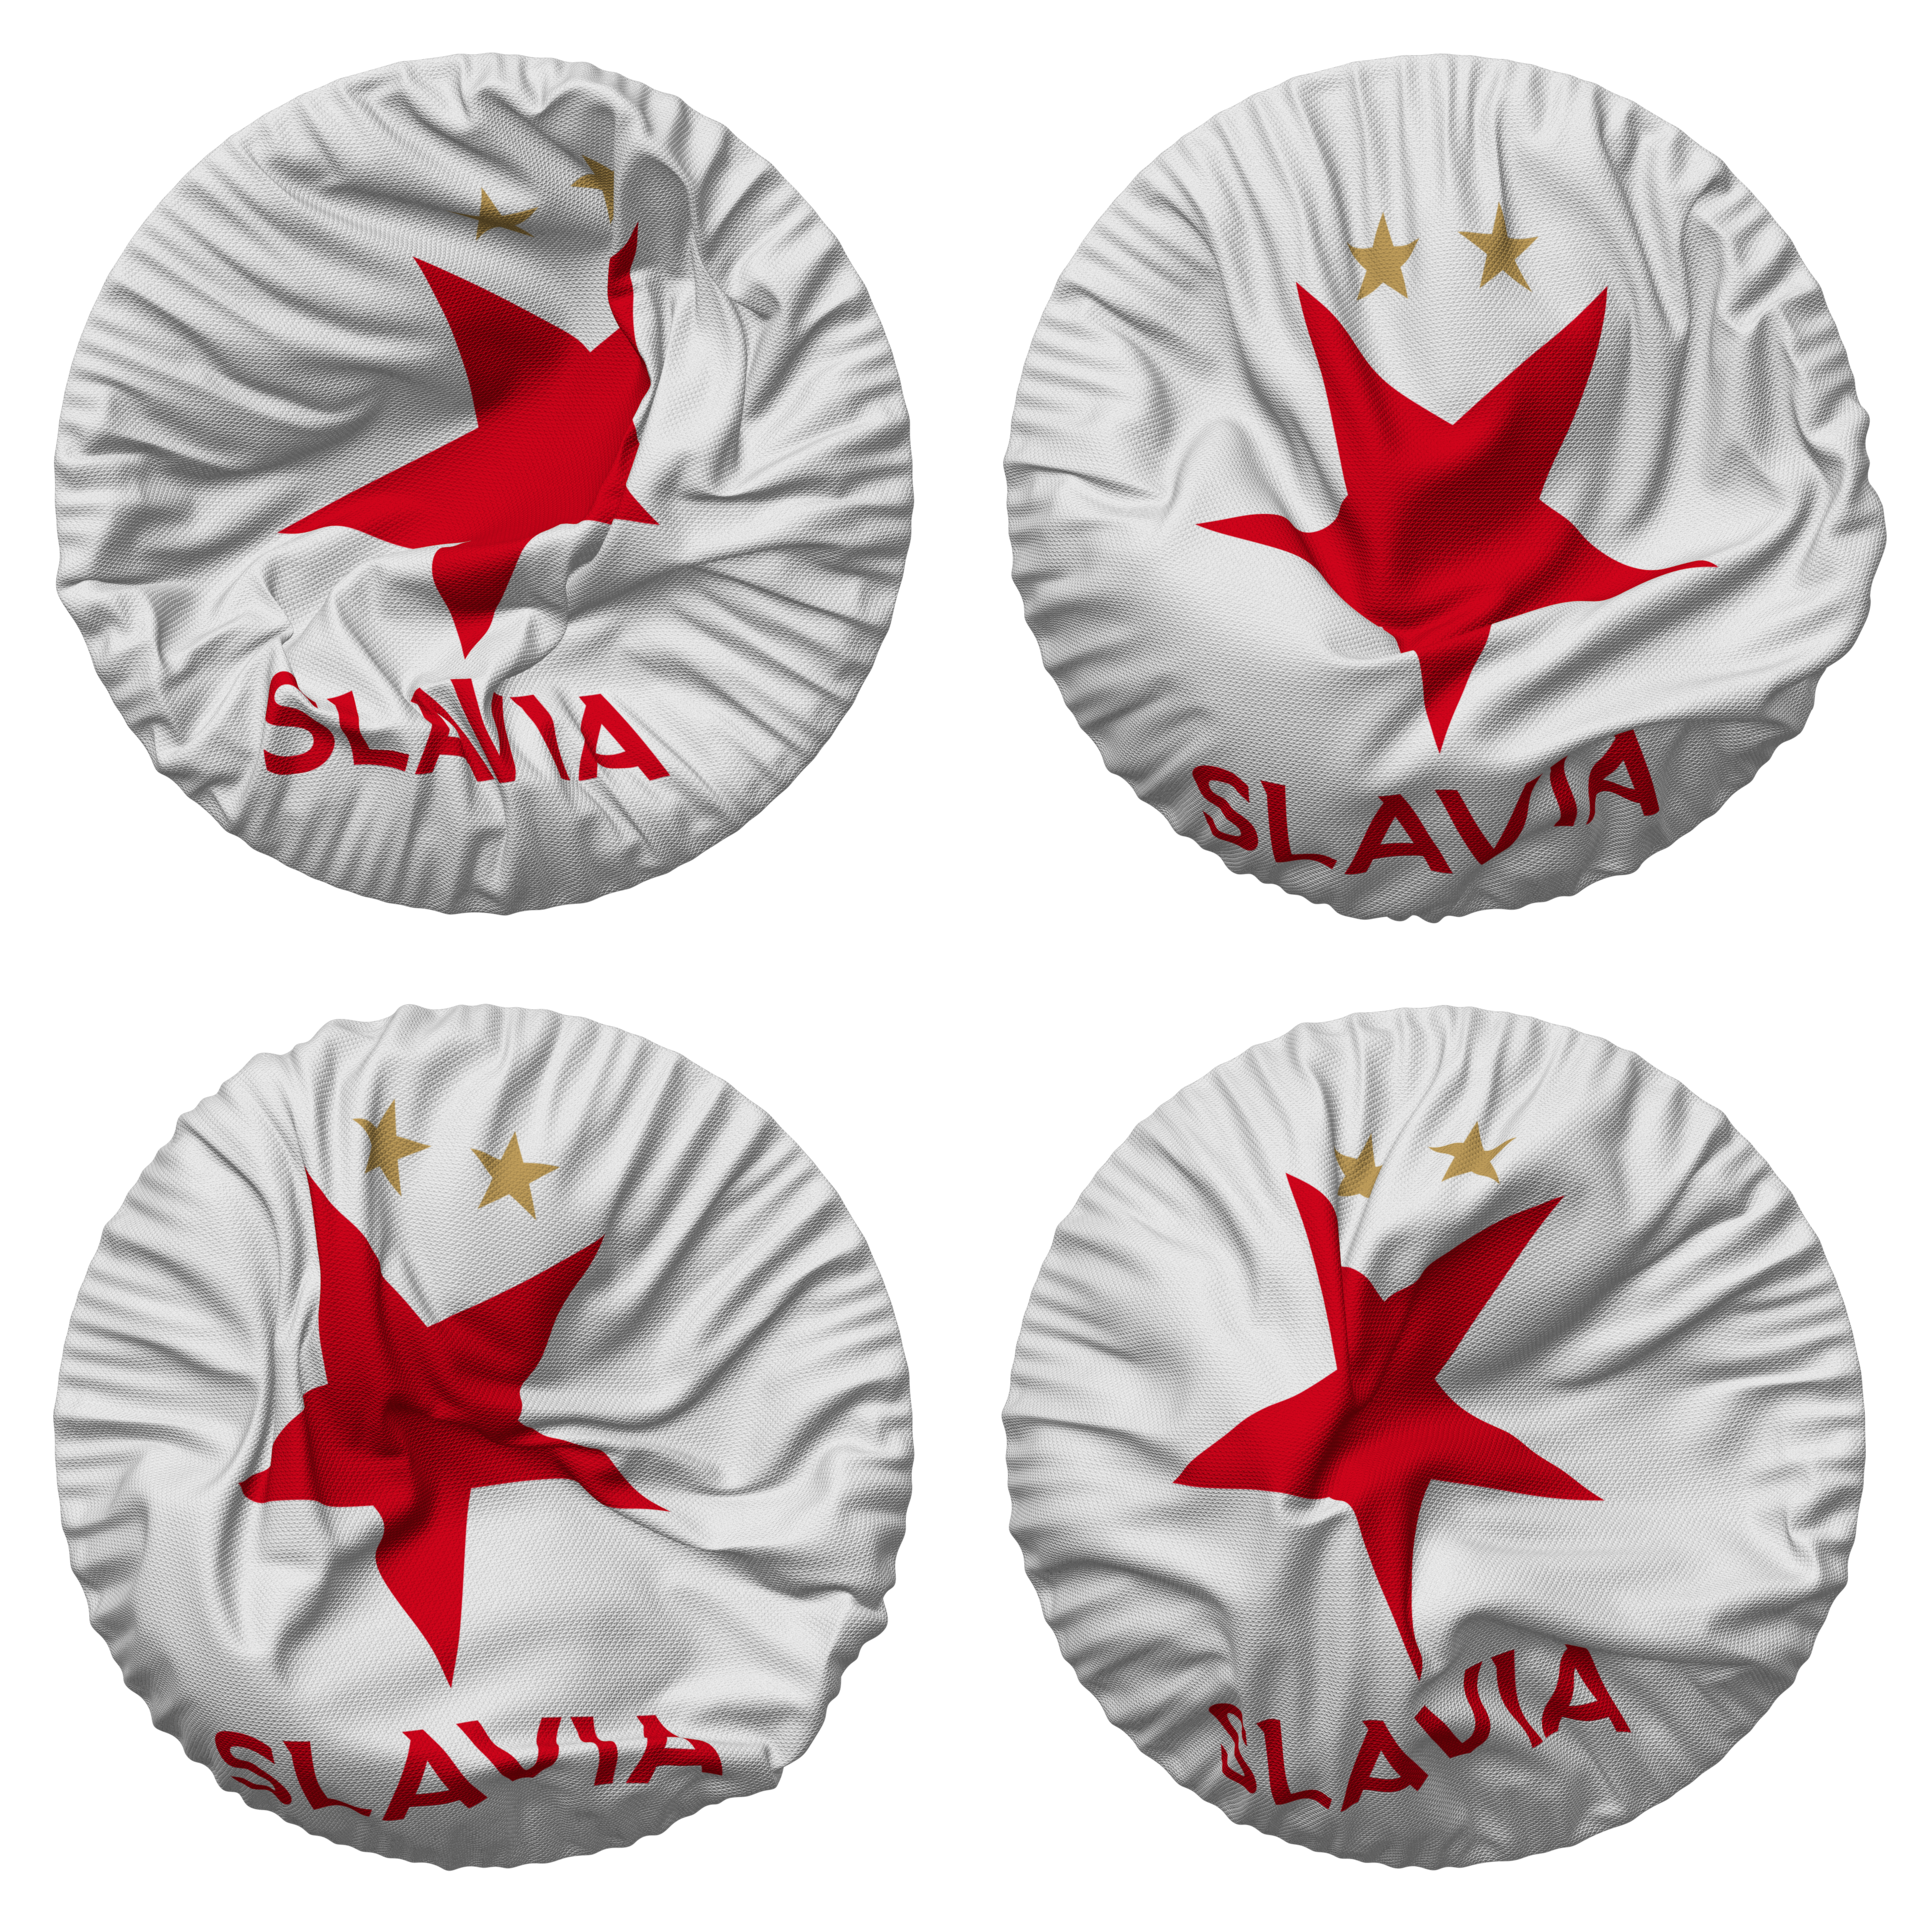 Slavia Praha Overview